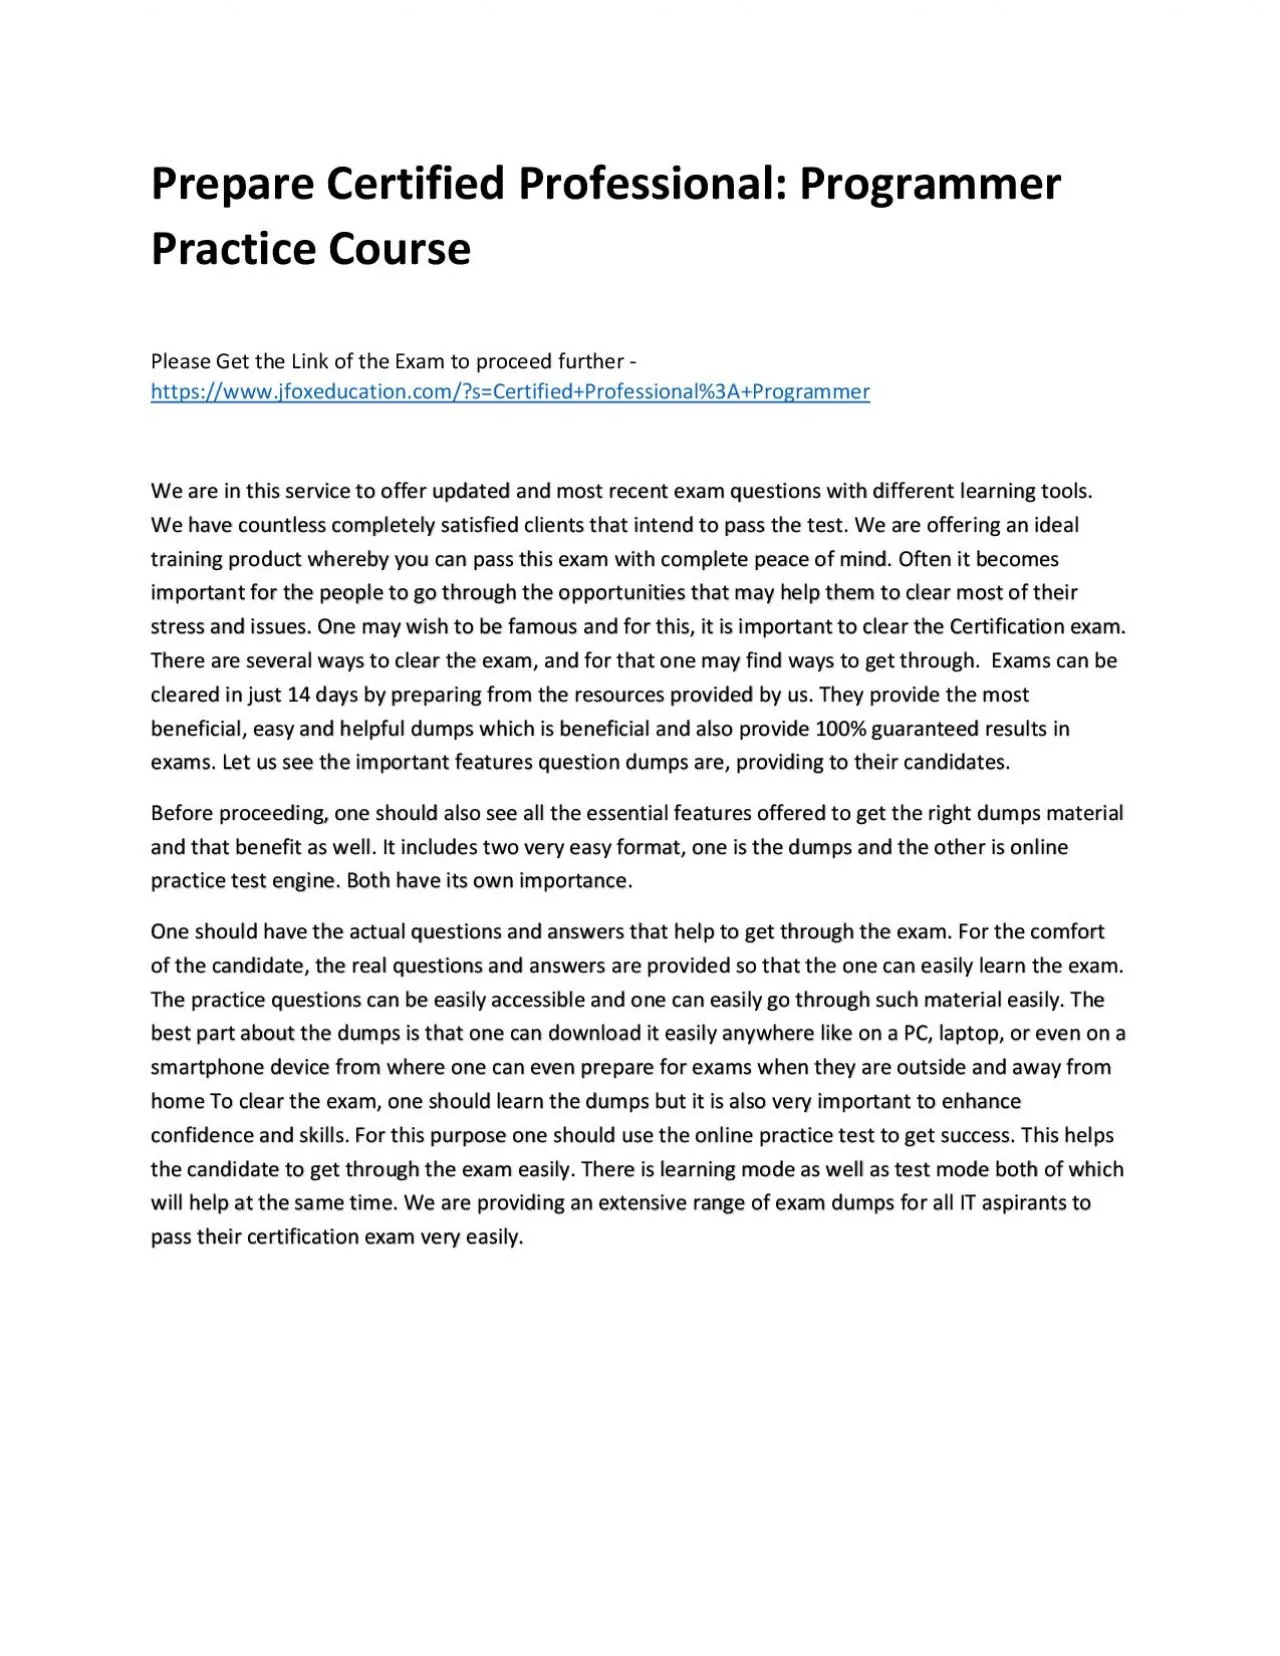 Prepare Certified Professional: Programmer Practice Course